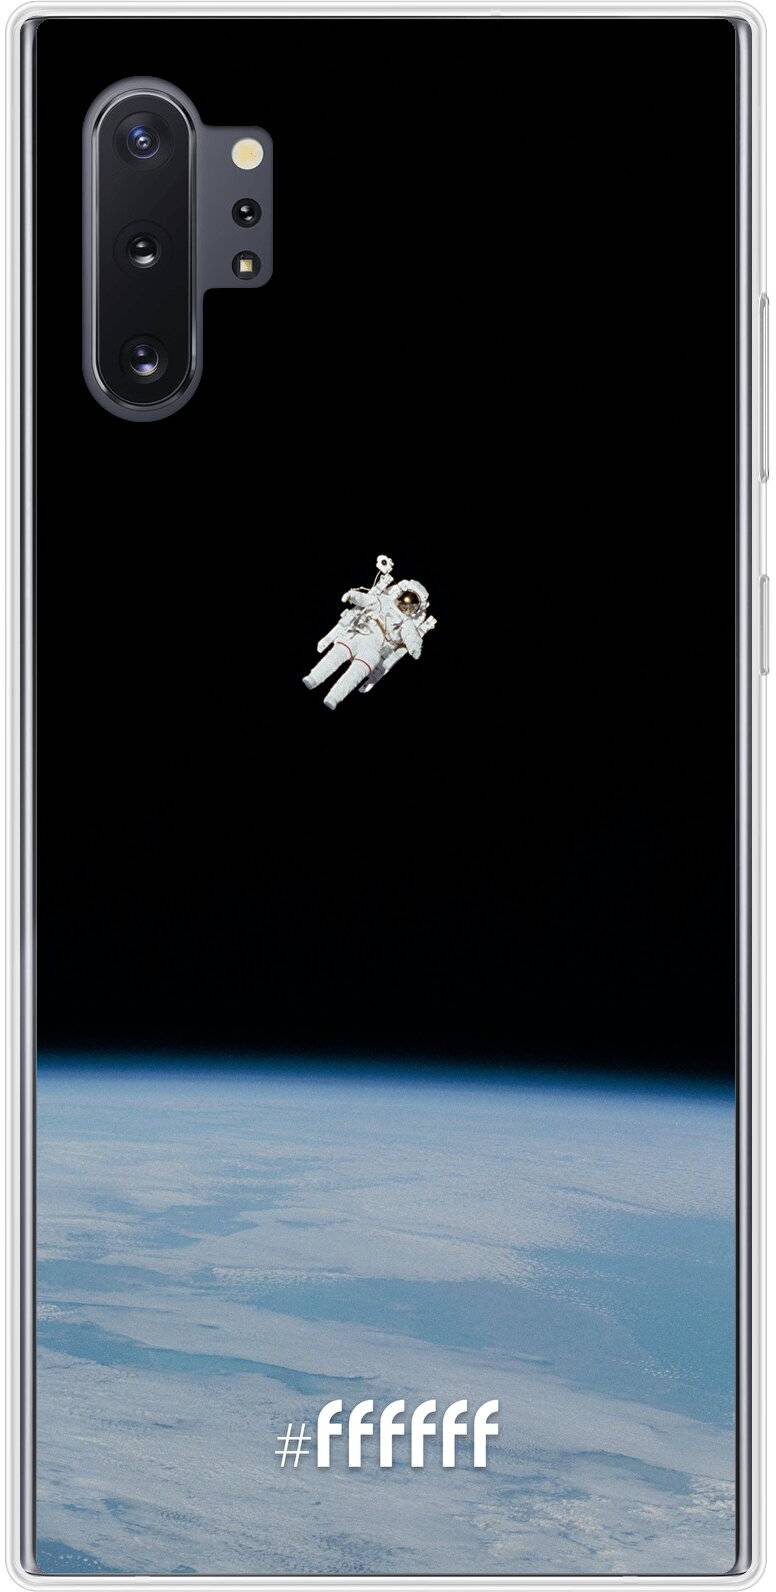 Spacewalk Galaxy Note 10 Plus